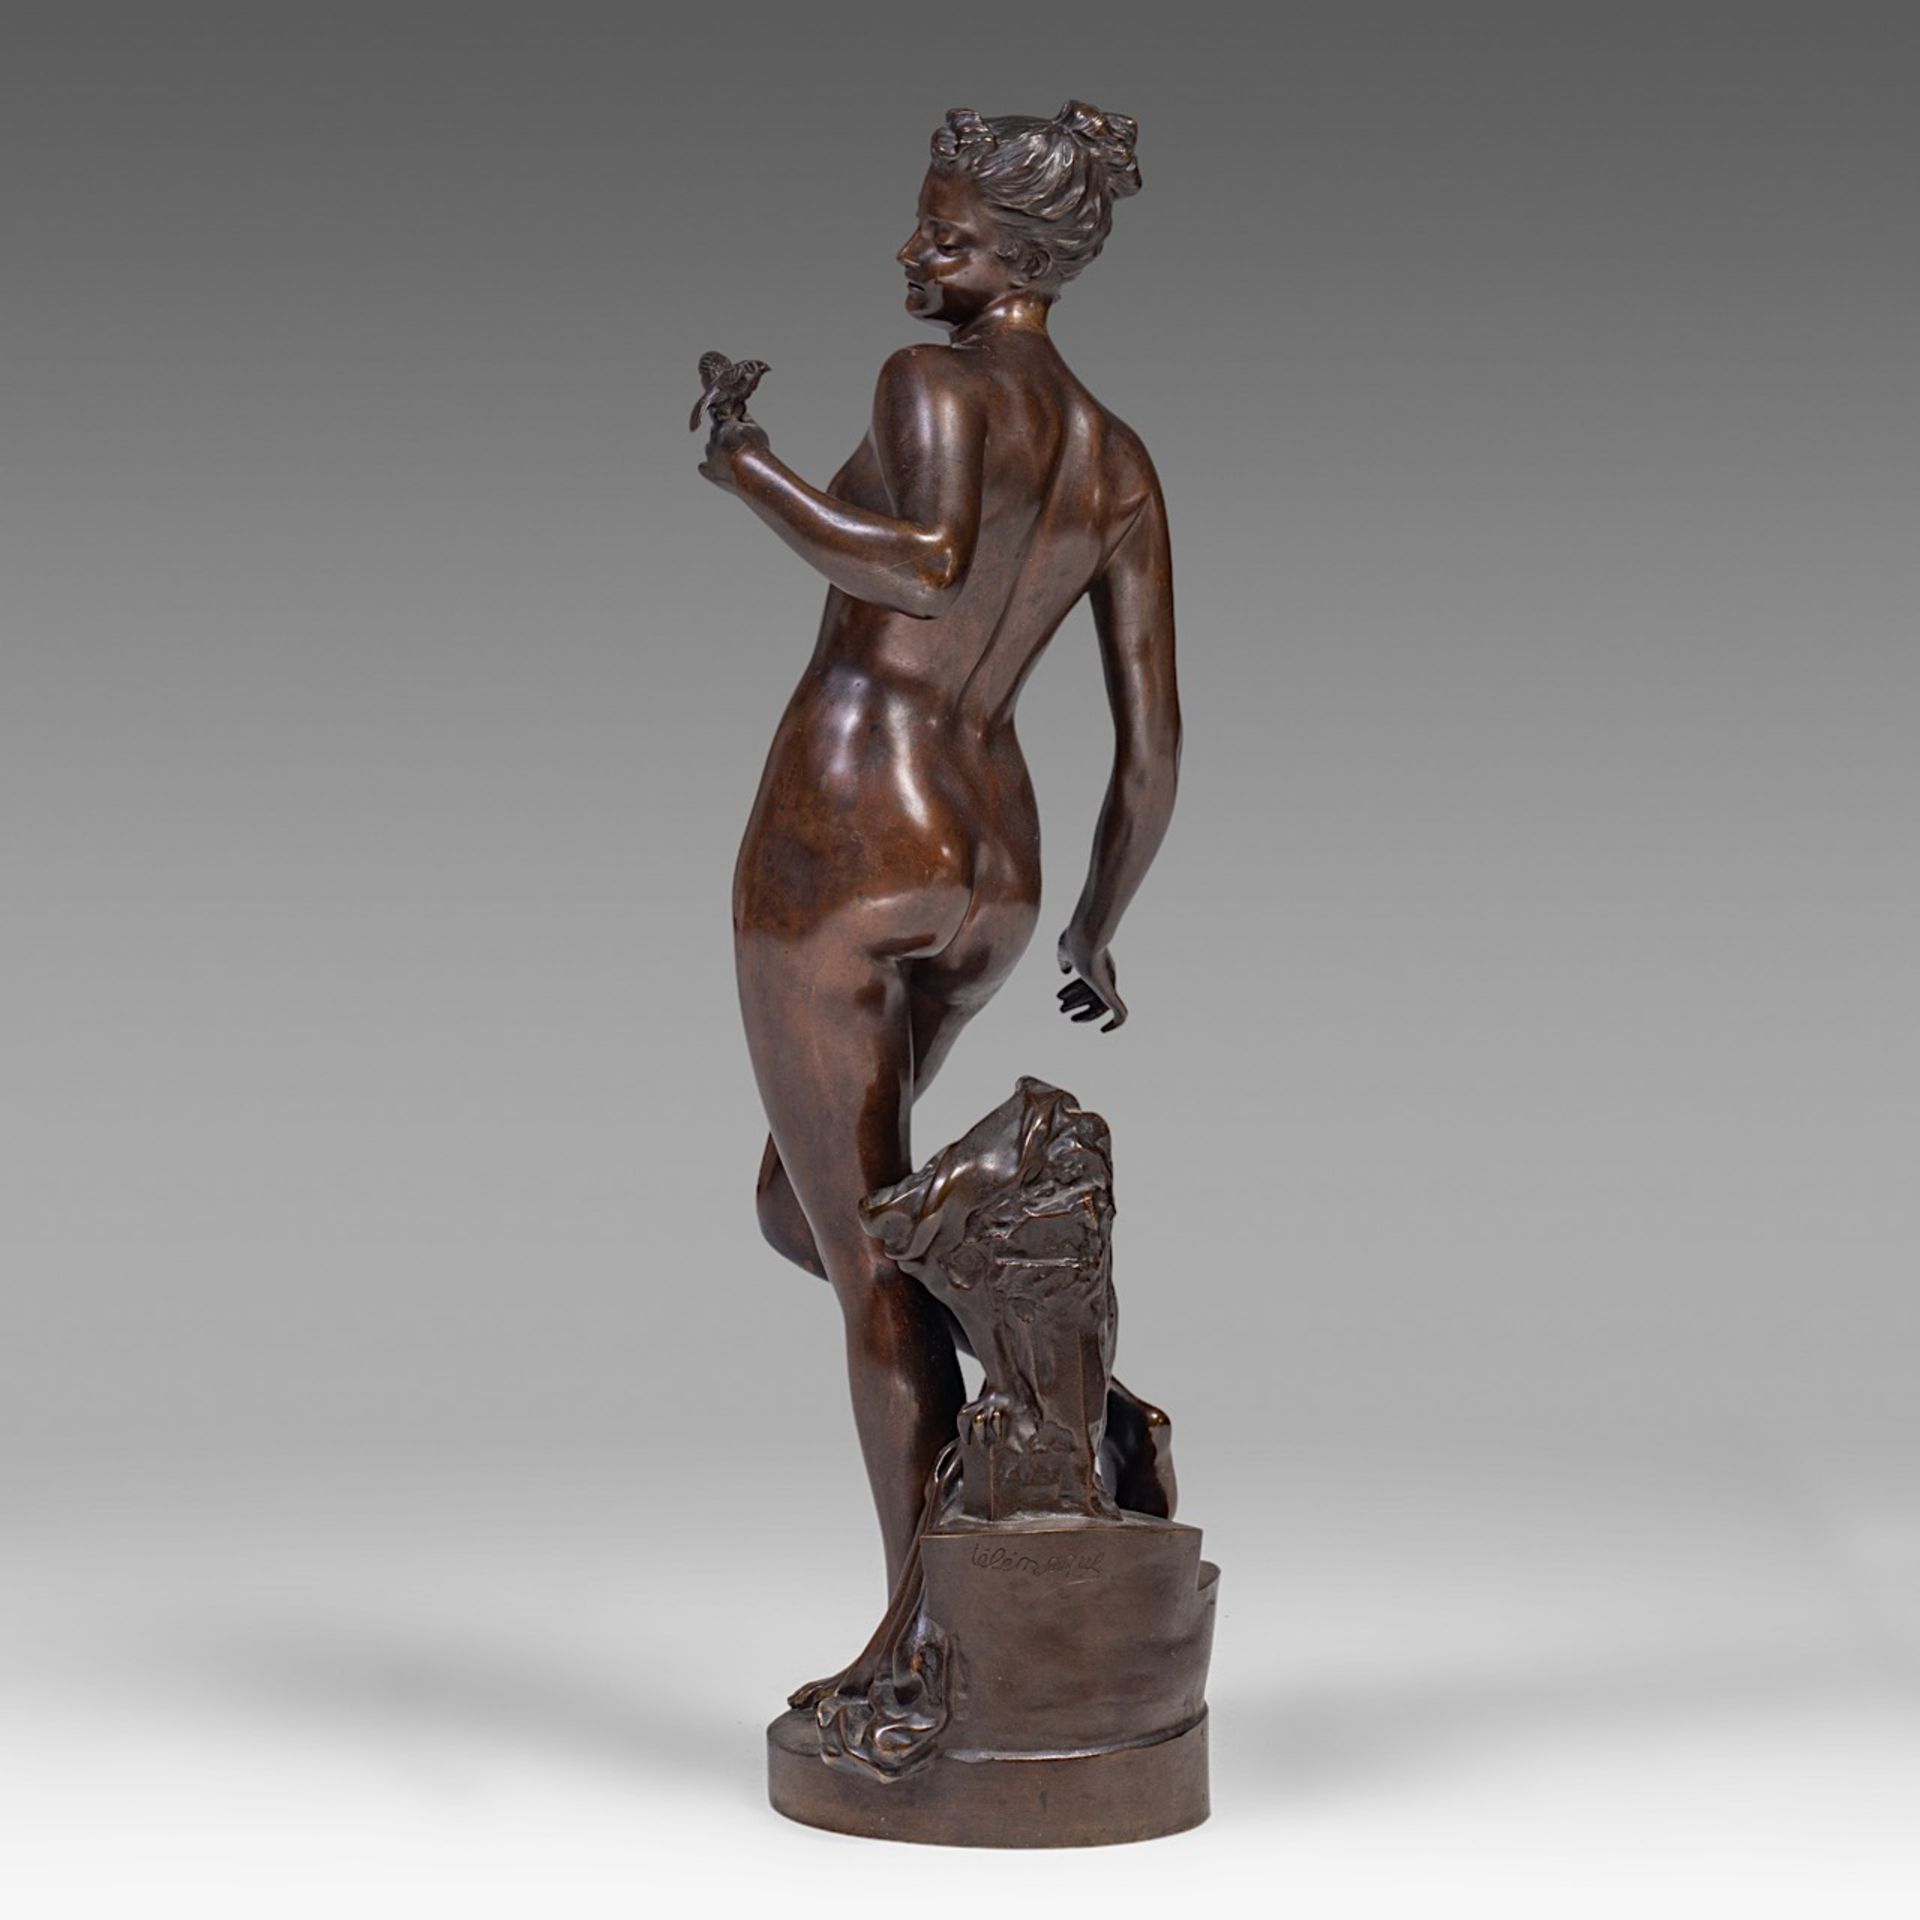 Signed 'Telemaque', Venus with bird, patinated bronze, H 75 cm - Image 3 of 10